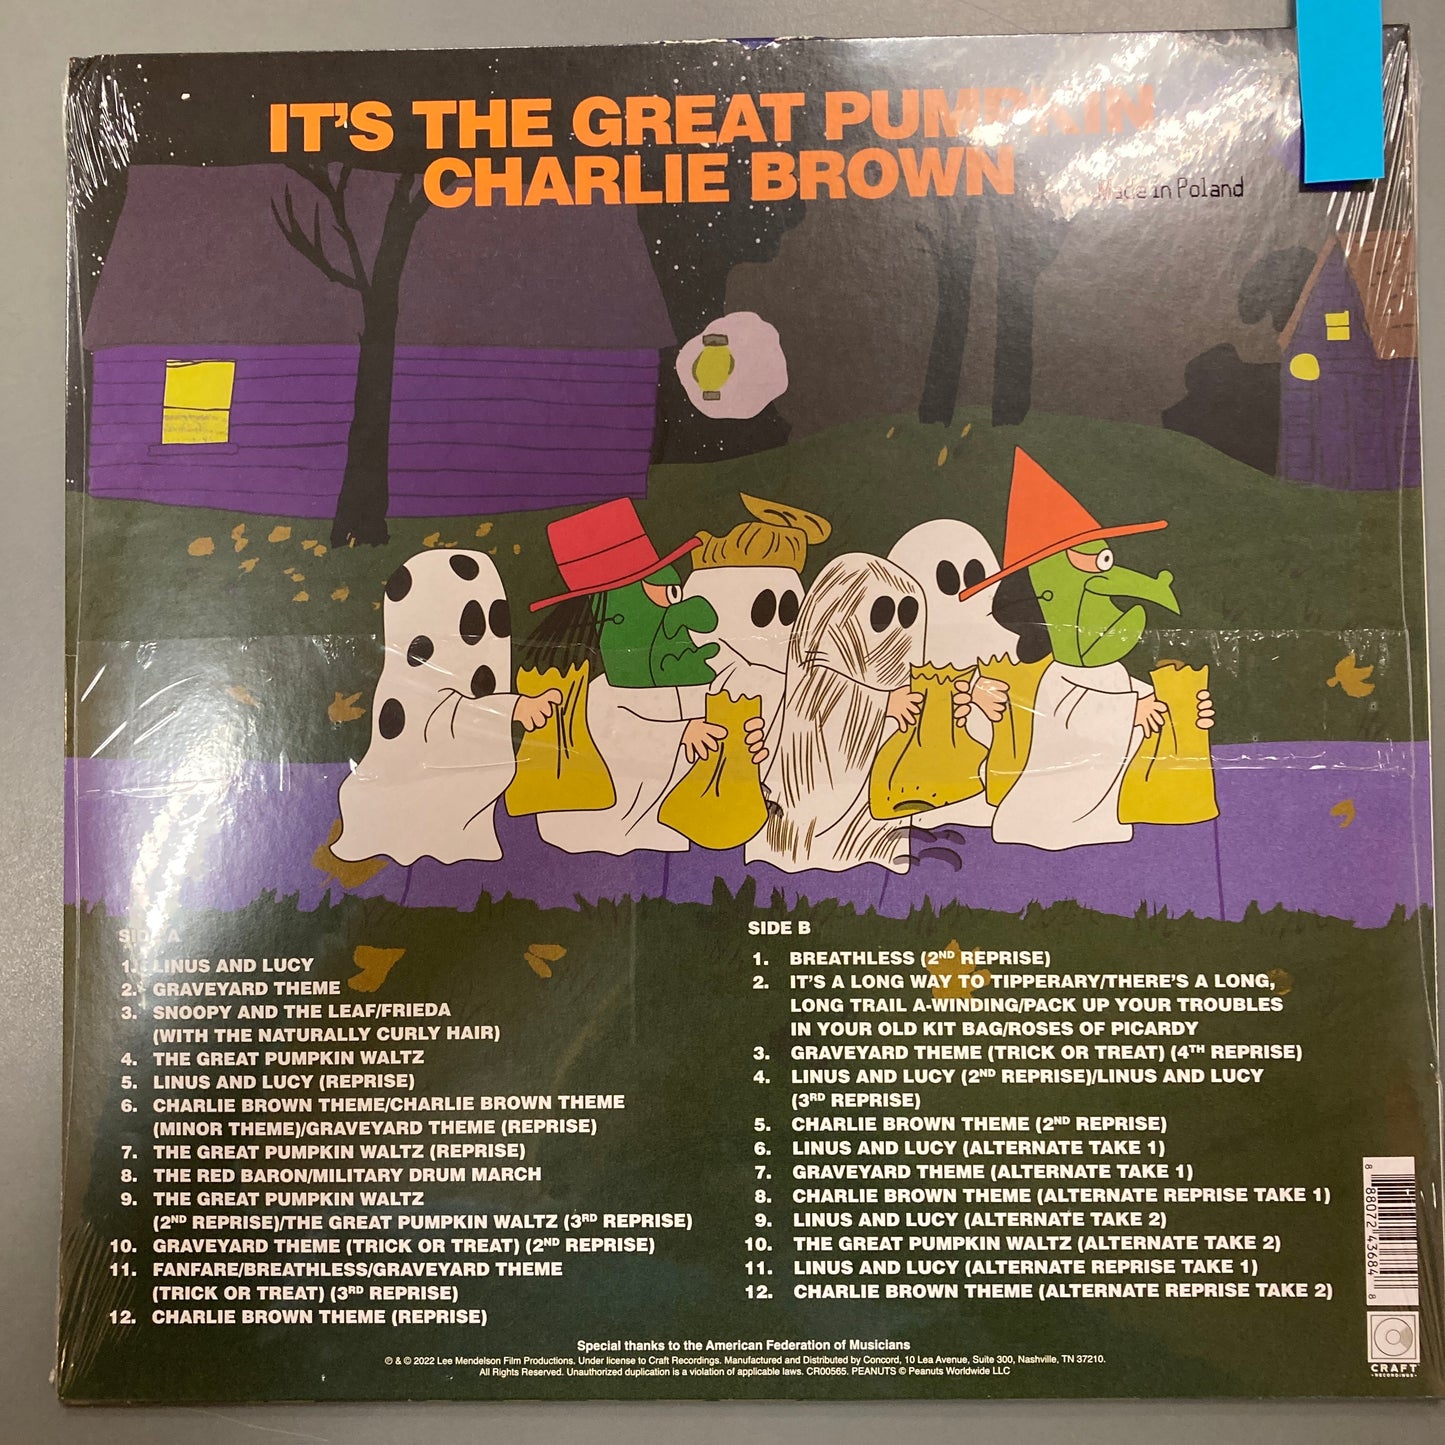 It's the Great Pumpkin, Charlie Brown (Vinyl)